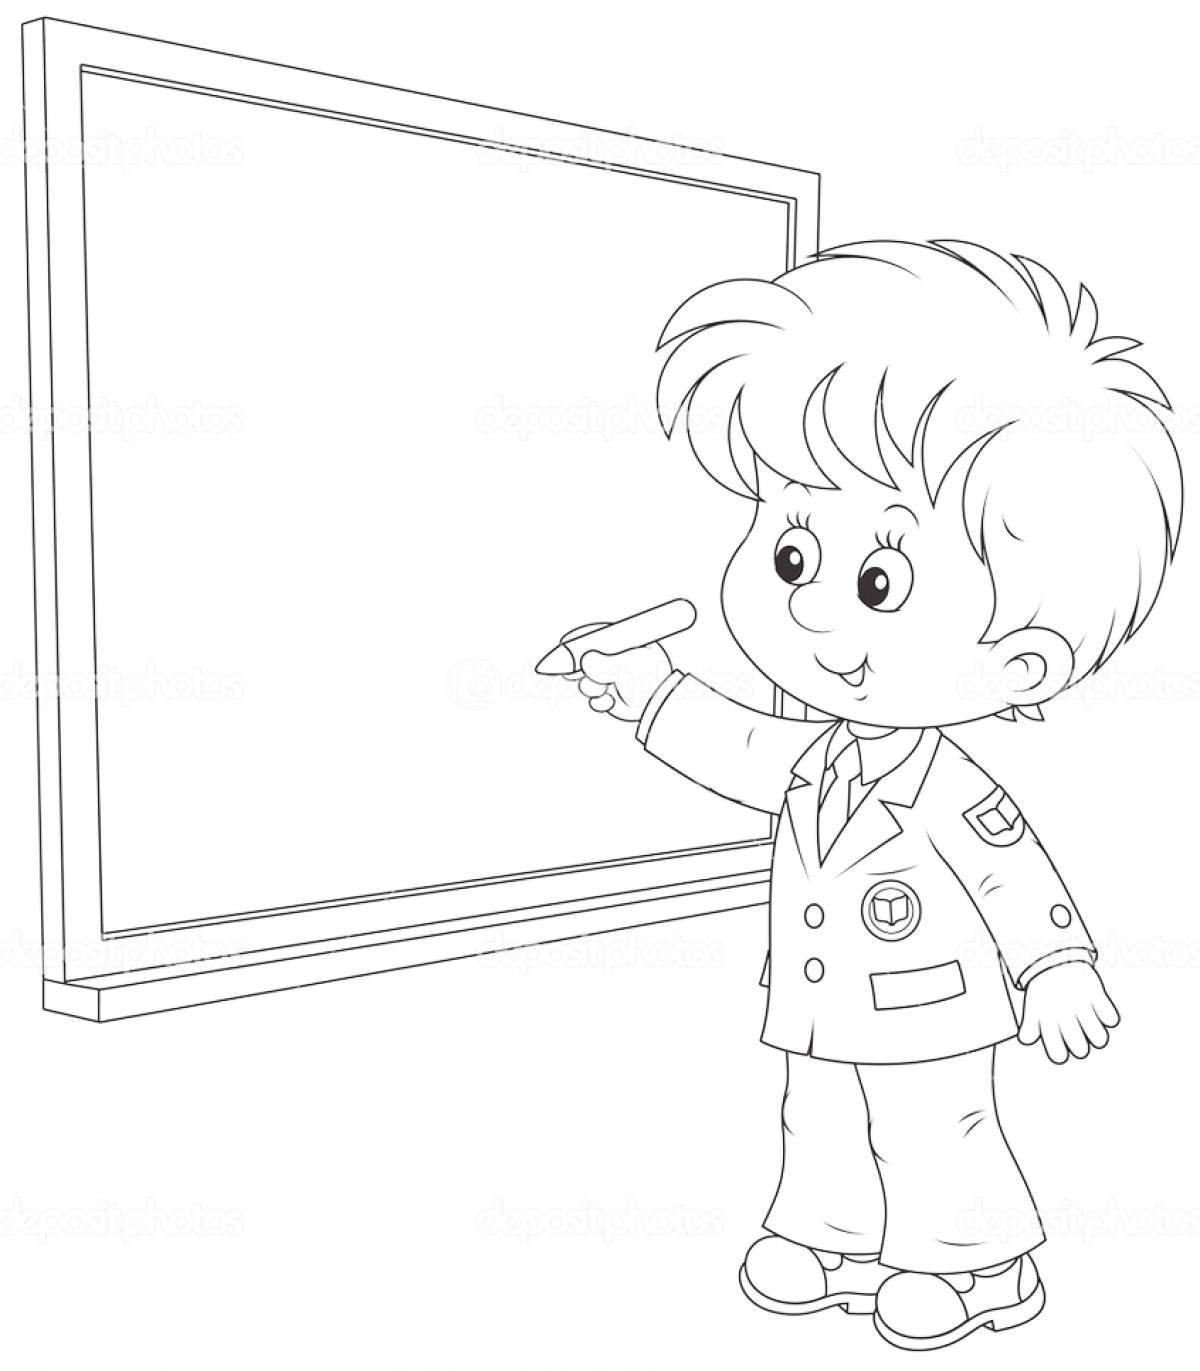 Boy at the blackboard